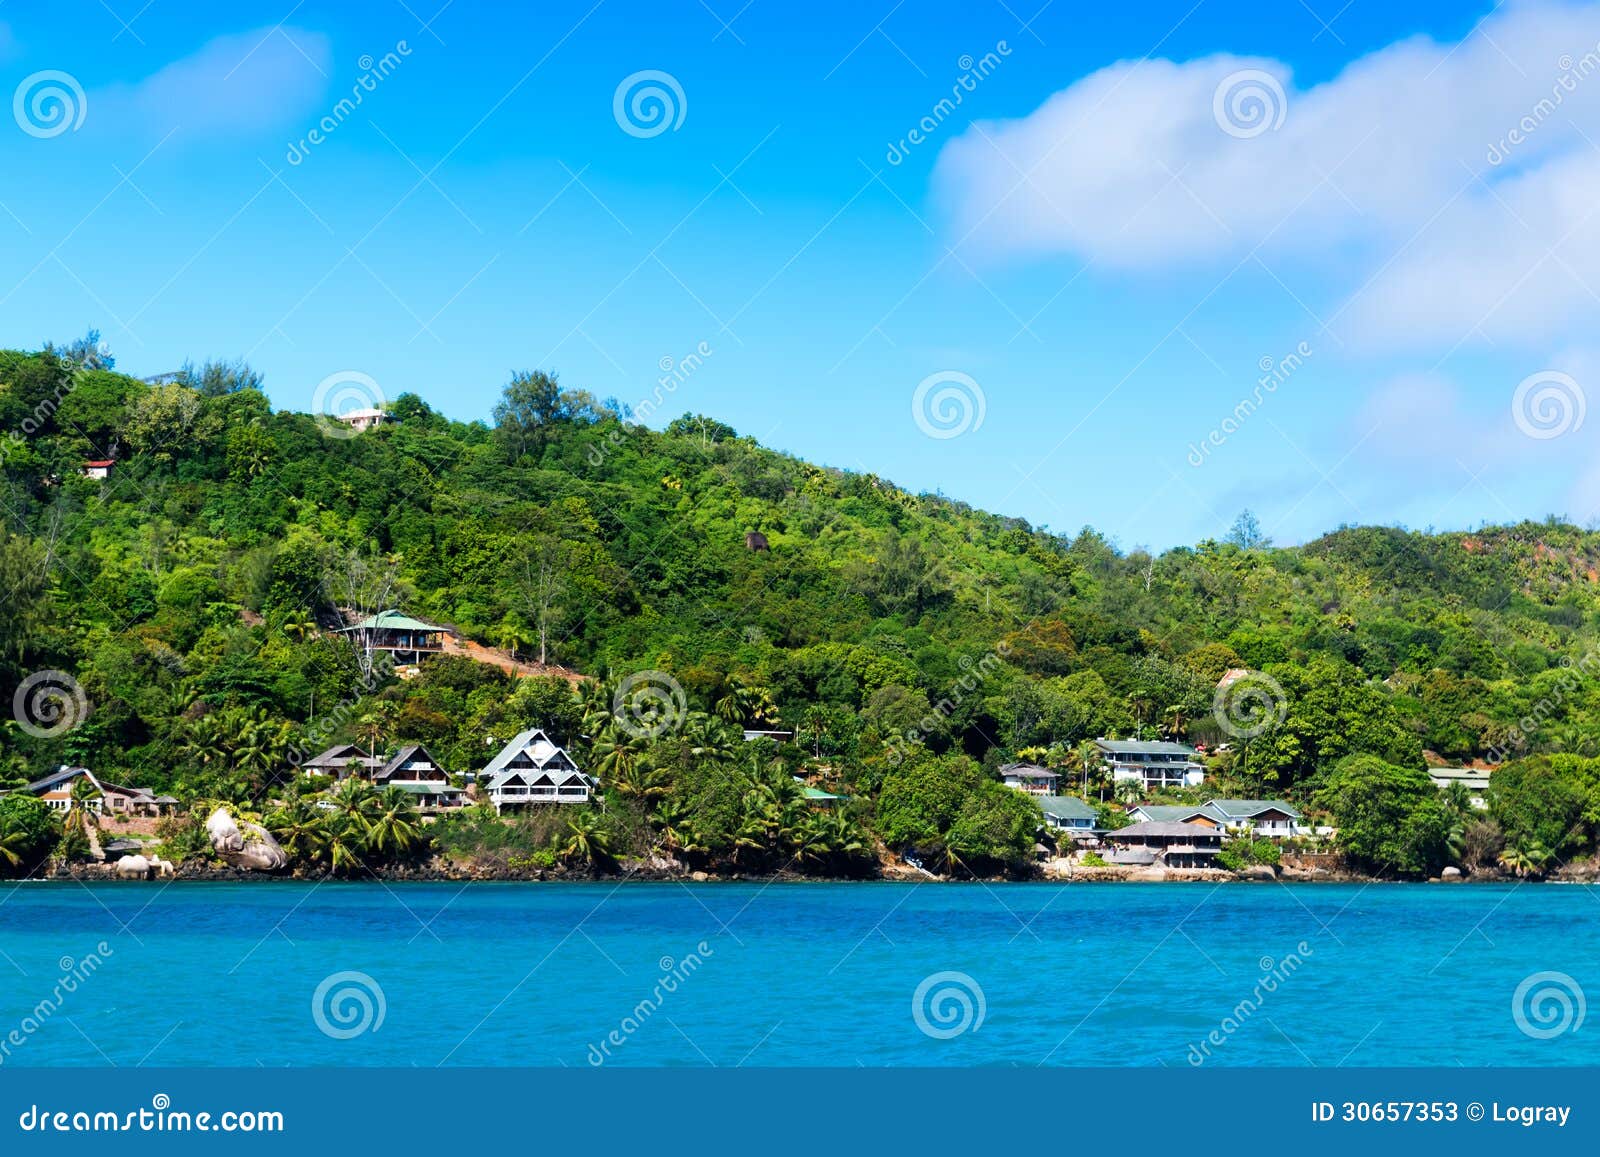 several hotels on green shore of la digue island, seychelles.